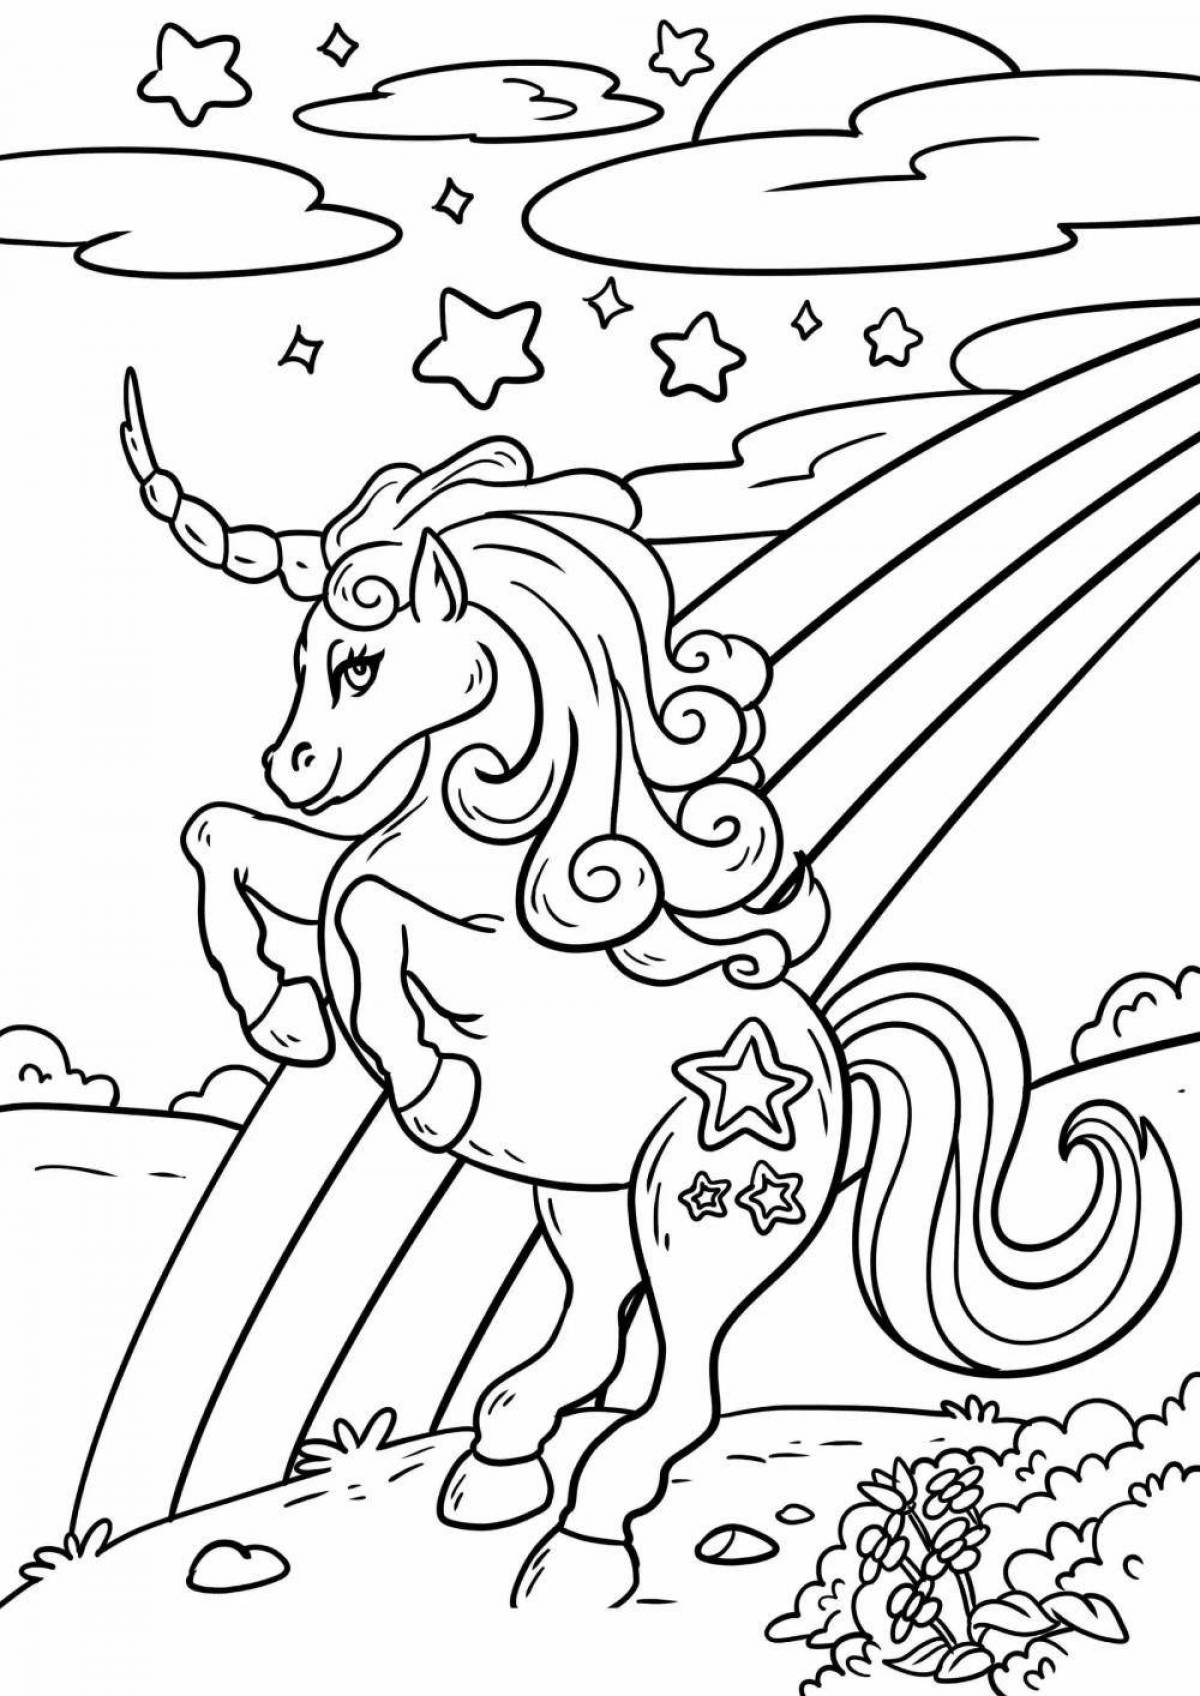 A cute unicorn coloring book for kids